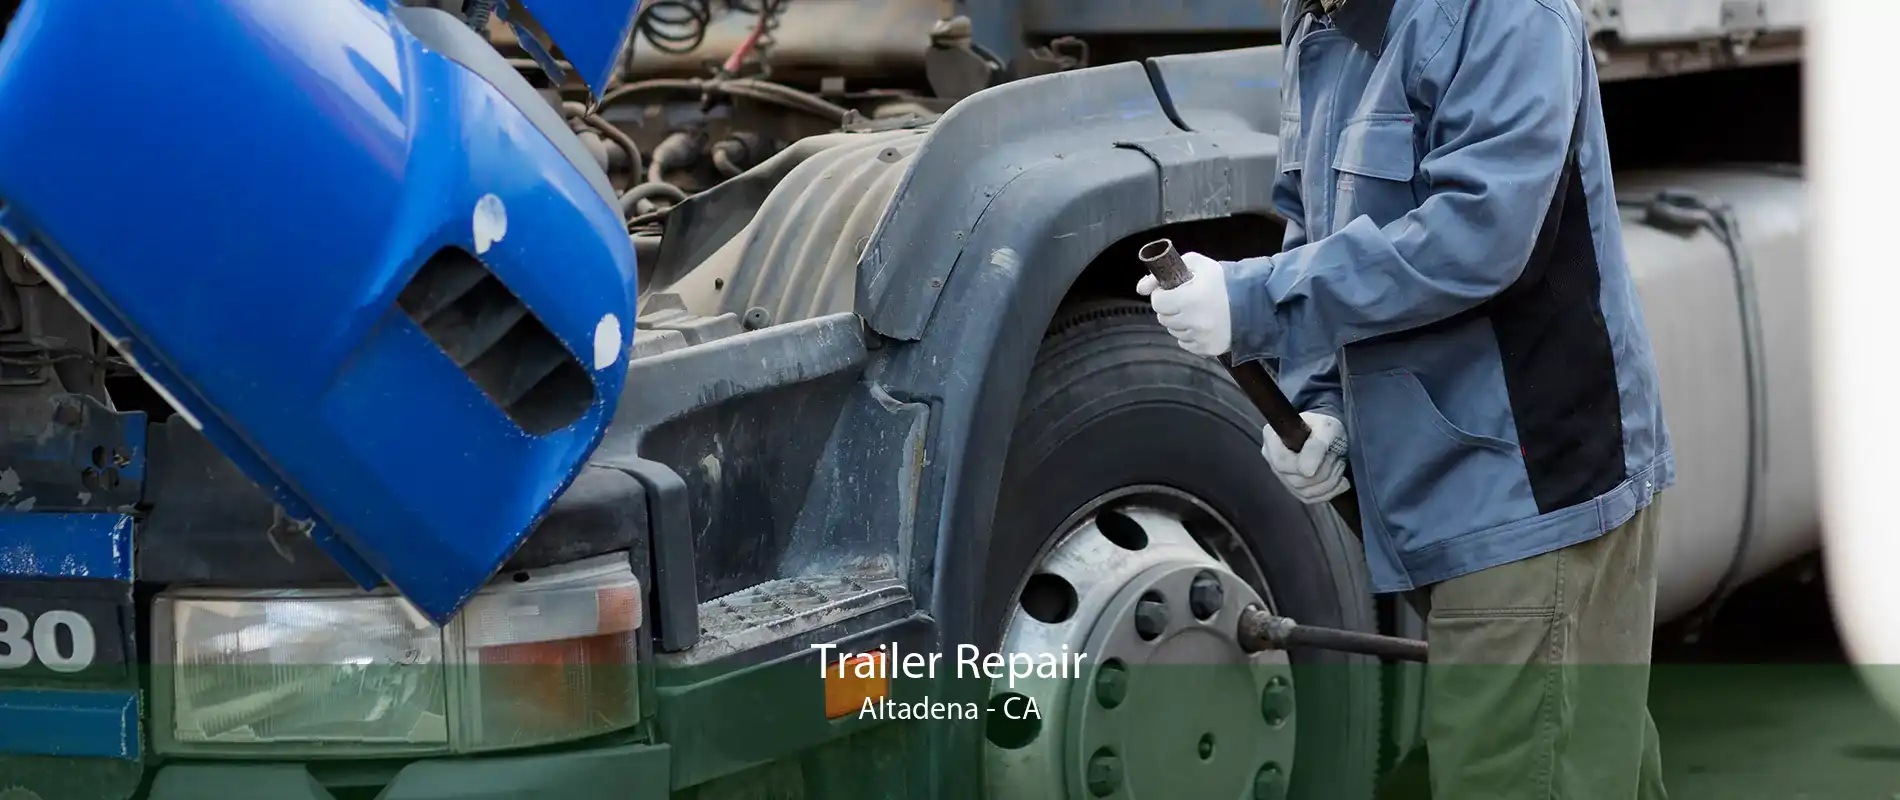 Trailer Repair Altadena - CA